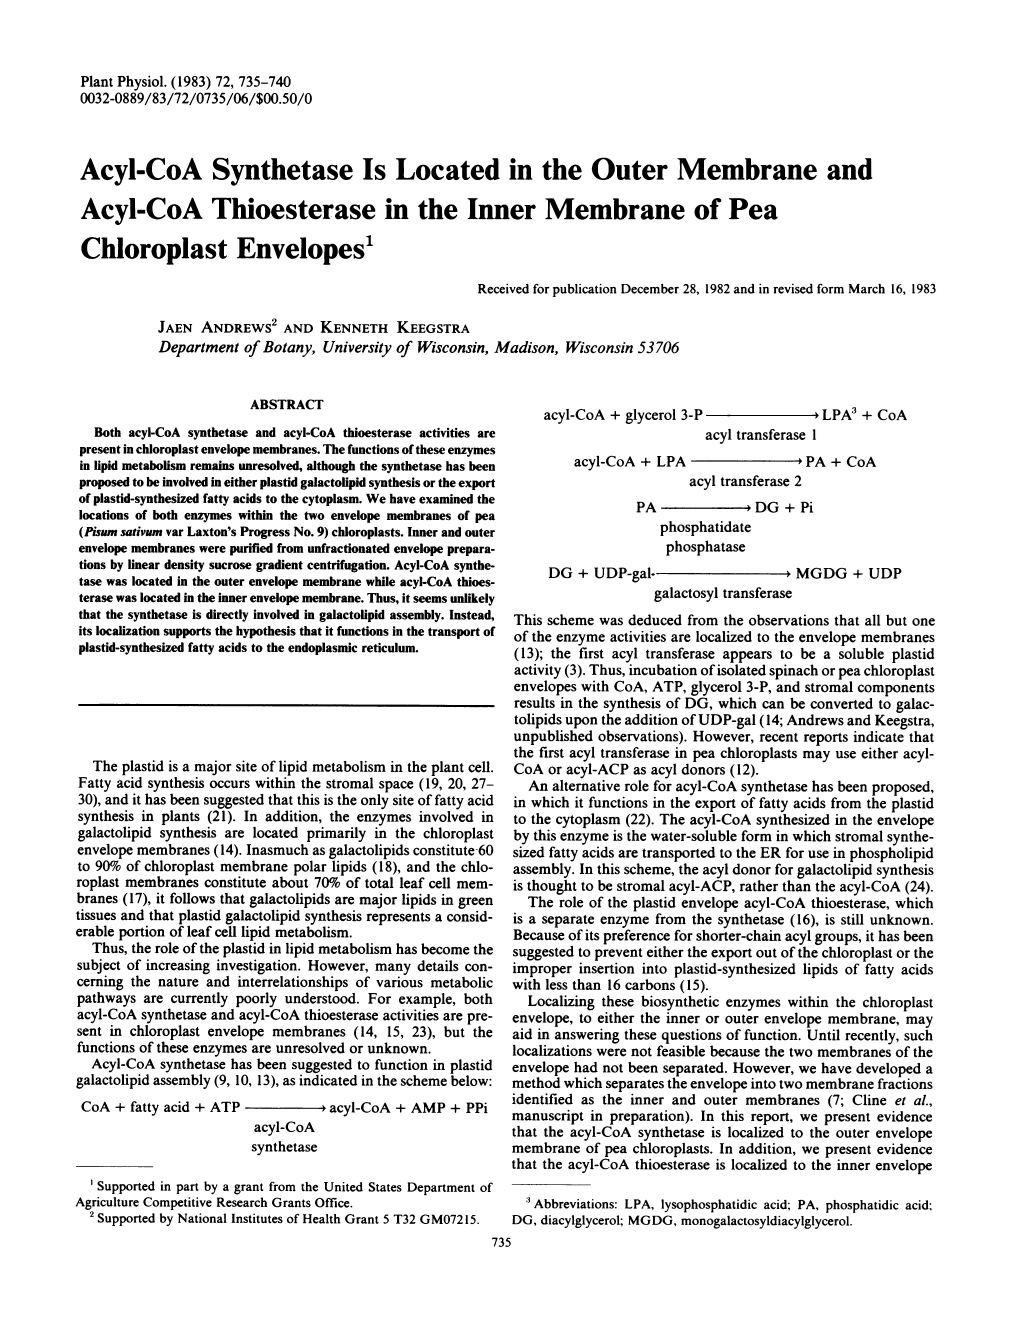 Chloroplast Envelopes1 Received for Publication December 28, 1982 and in Revised Form March 16, 1983